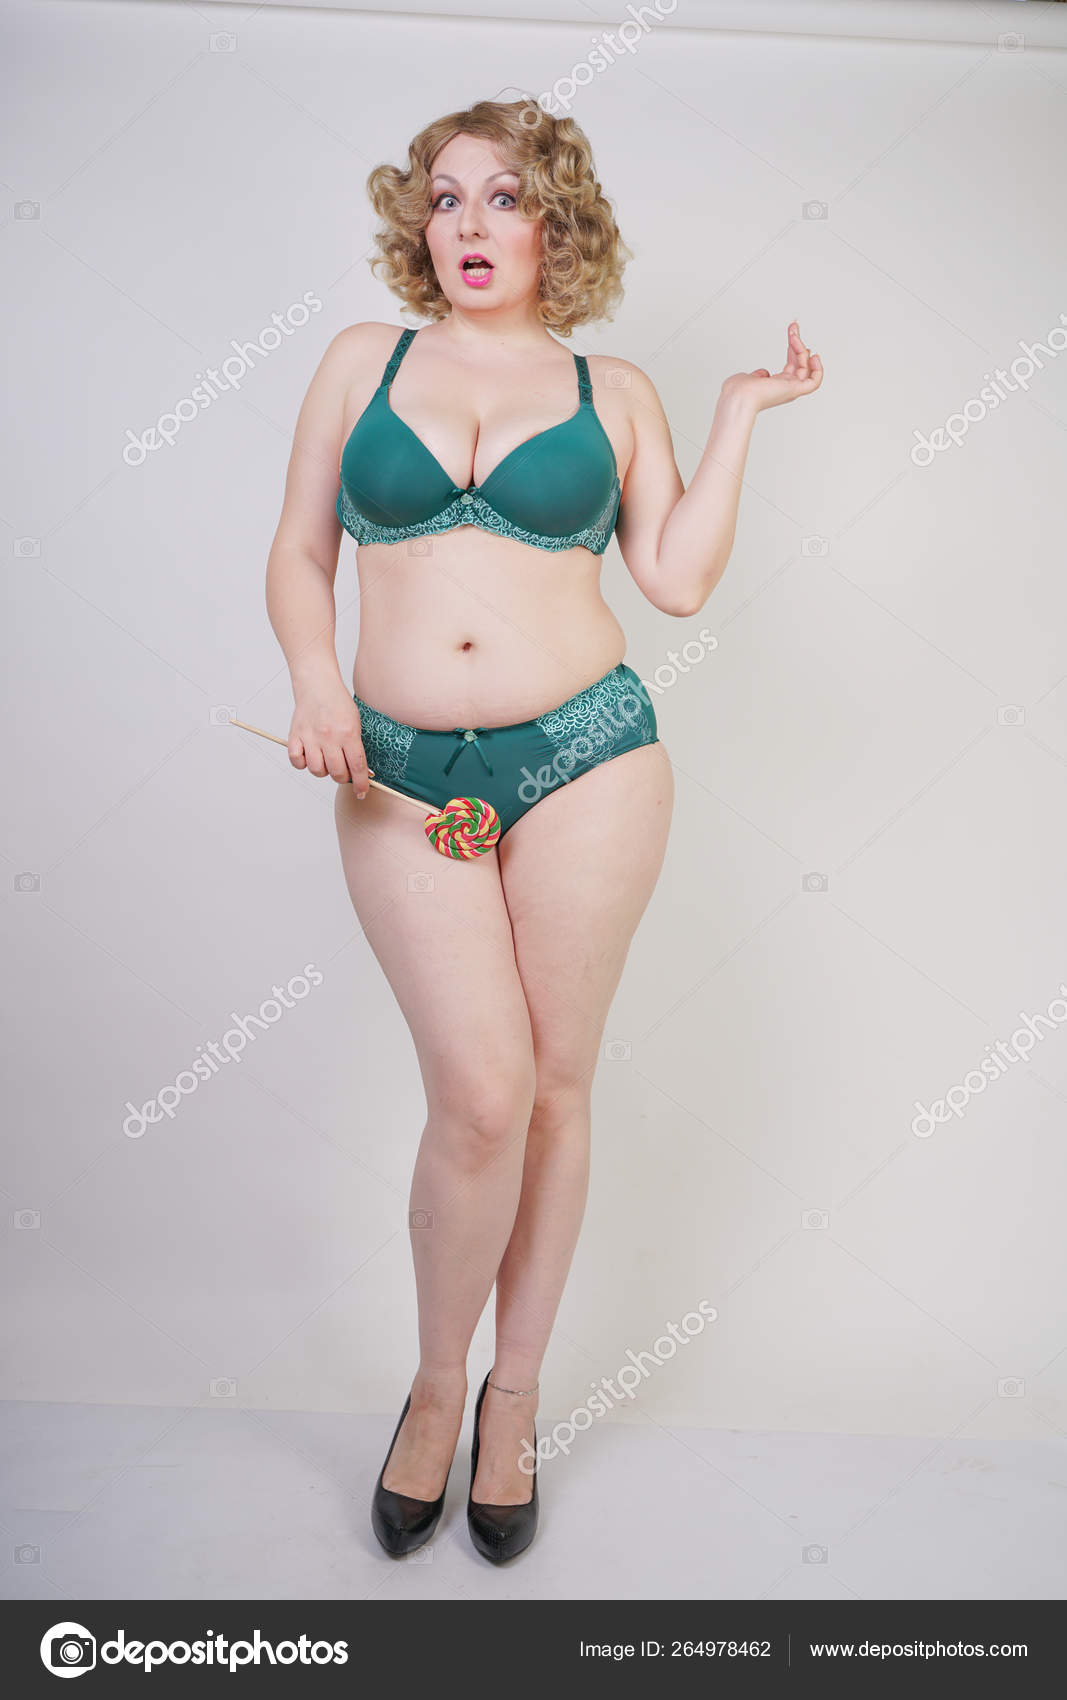 depositphotos_264978462-stock-photo-beautiful-young-caucasian-chubby-woman.jpg